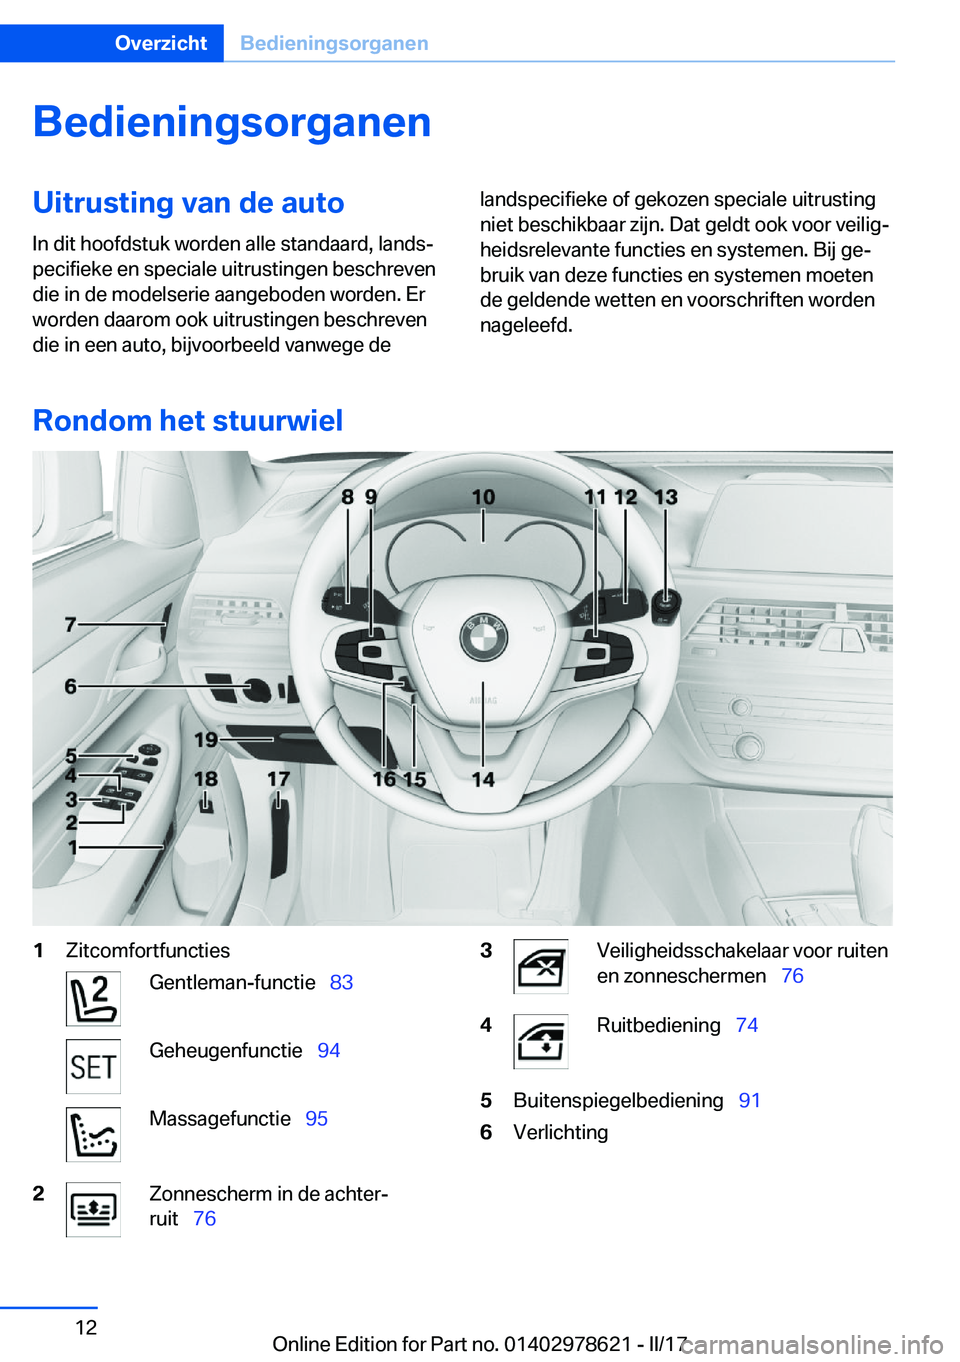 BMW 7 SERIES 2018  Instructieboekjes (in Dutch) �B�e�d�i�e�n�i�n�g�s�o�r�g�a�n�e�n�U�i�t�r�u�s�t�i�n�g��v�a�n��d�e��a�u�t�o�I�n� �d�i�t� �h�o�o�f�d�s�t�u�k� �w�o�r�d�e�n� �a�l�l�e� �s�t�a�n�d�a�a�r�d�,� �l�a�n�d�sj
�p�e�c�i�f�i�e�k�e� �e�n� �s�